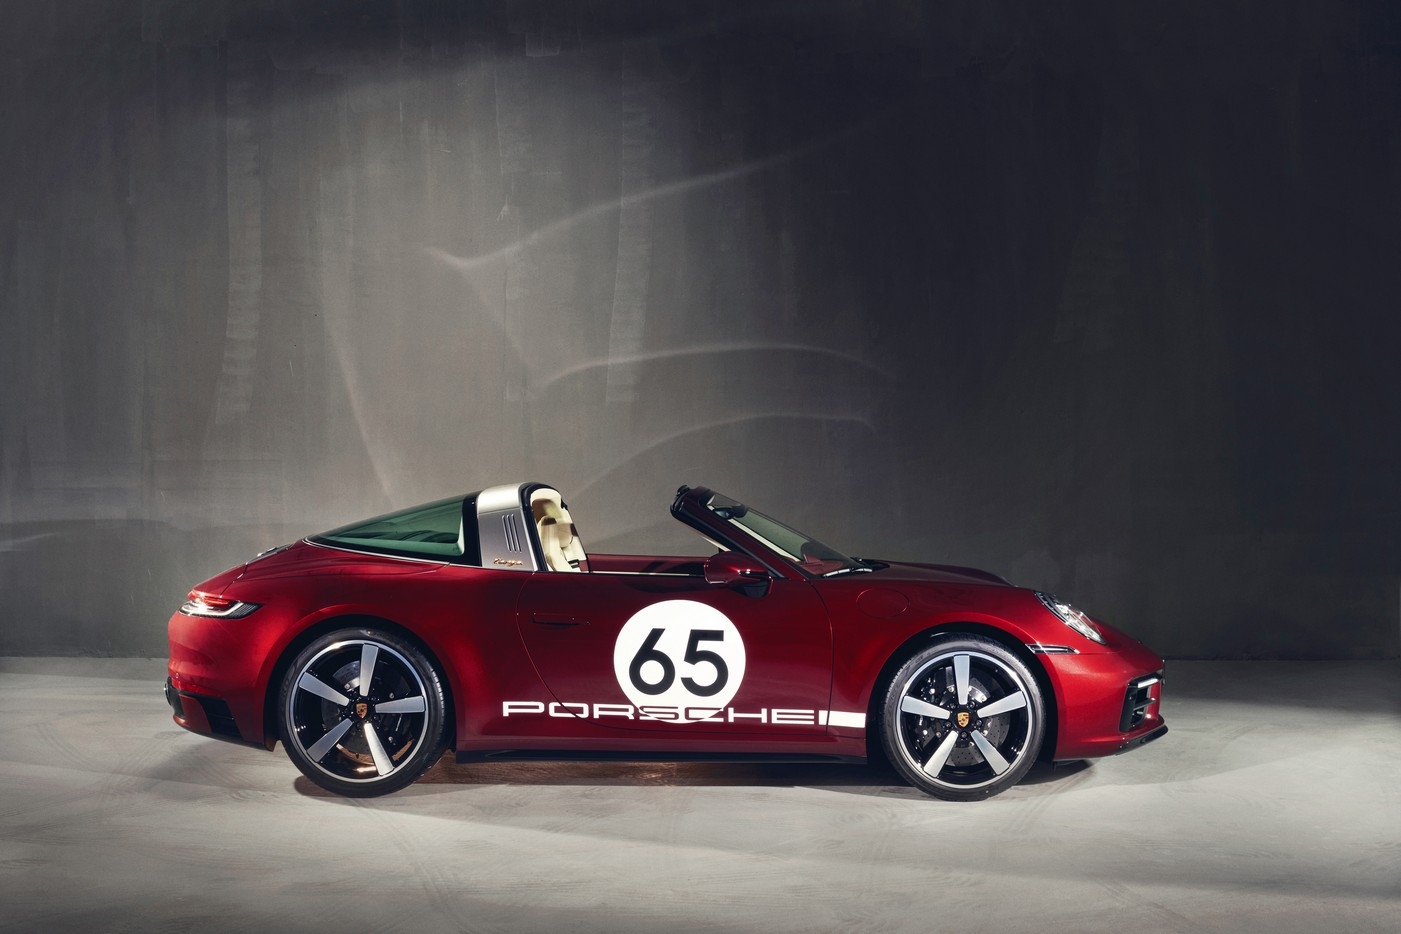 Porsche%20911%20Targa%204S%20Heritage%20Design%20phi%C3%AAn%20b%E1%BA%A3n%20gi%E1%BB%9Bi%20h%E1%BA%A1n%20%282%29.jpg